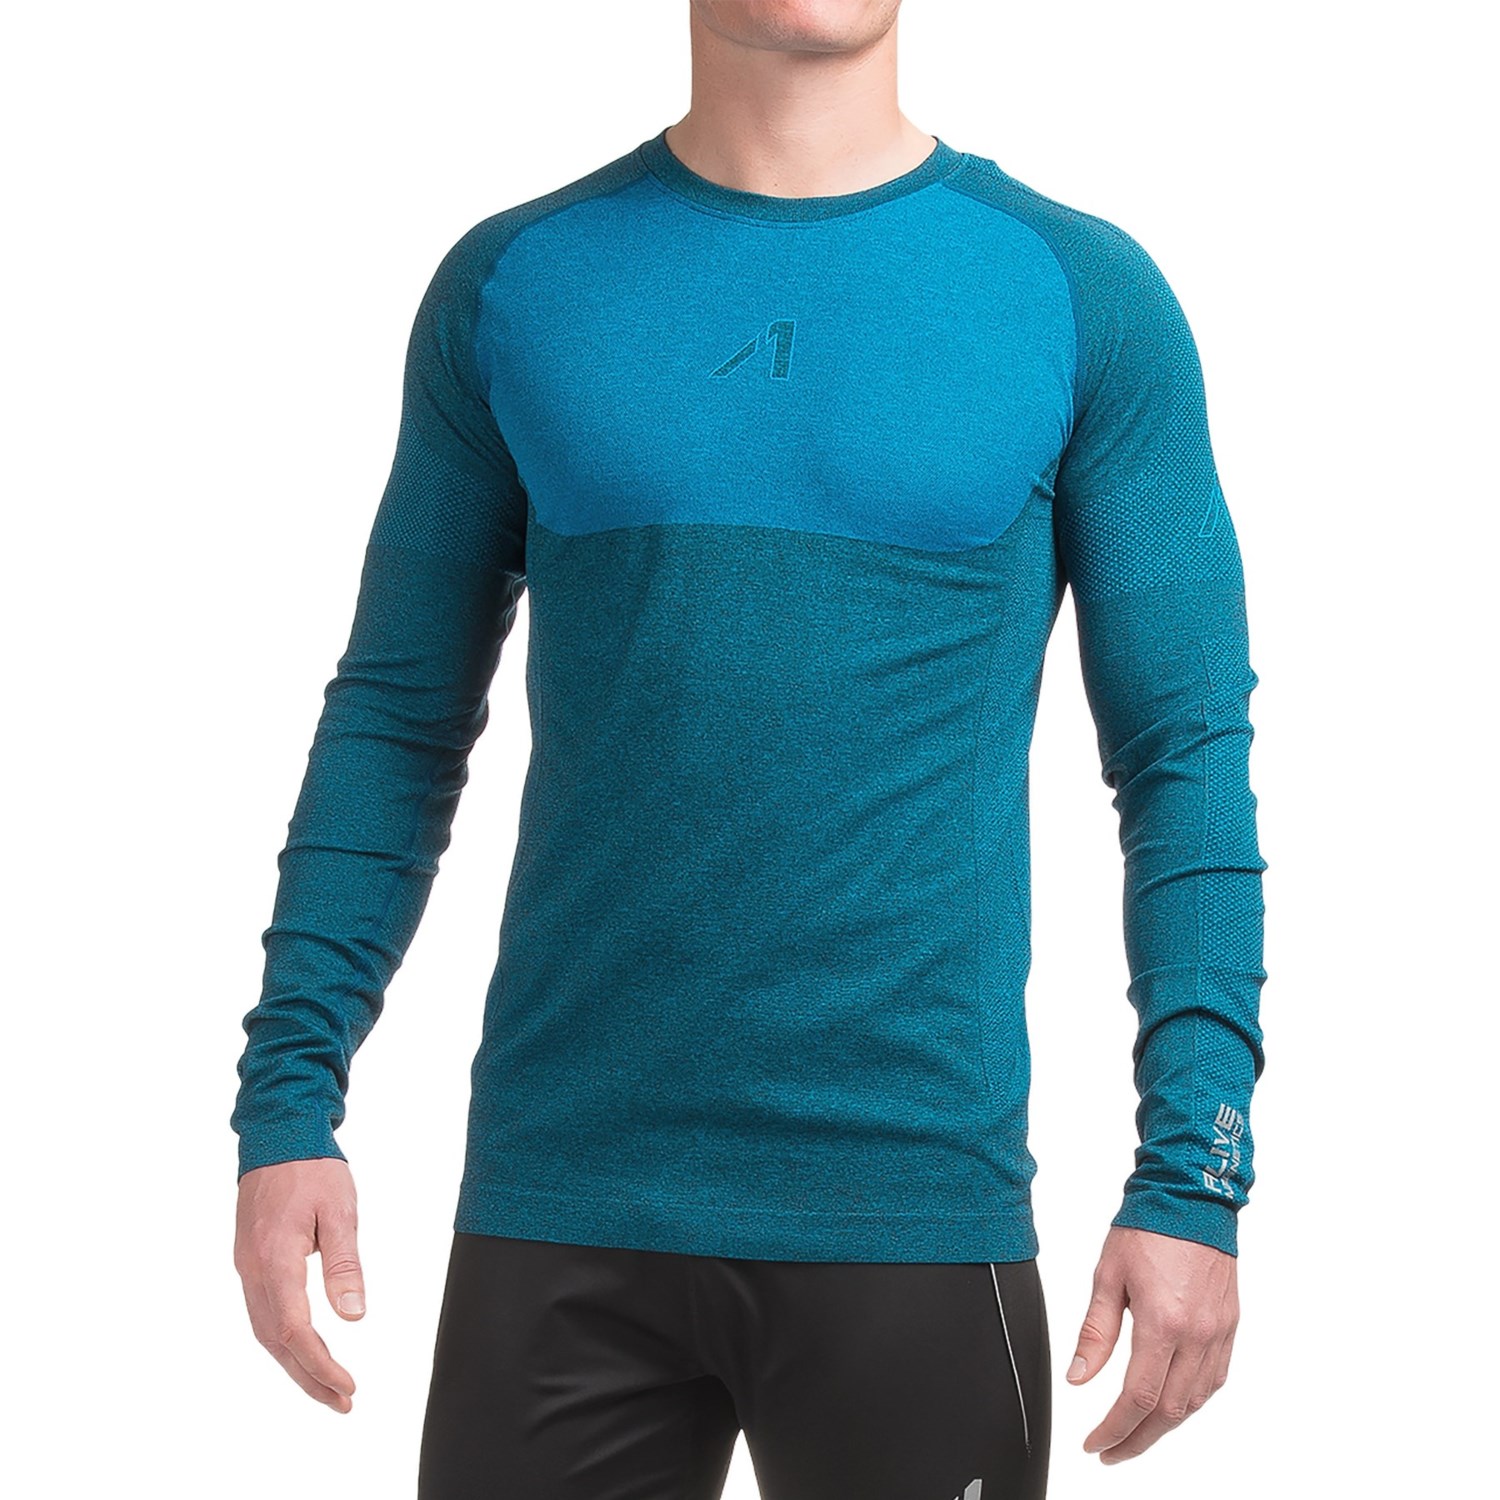 AL1VE Seamless Running Shirt (For Men) - Save 72%